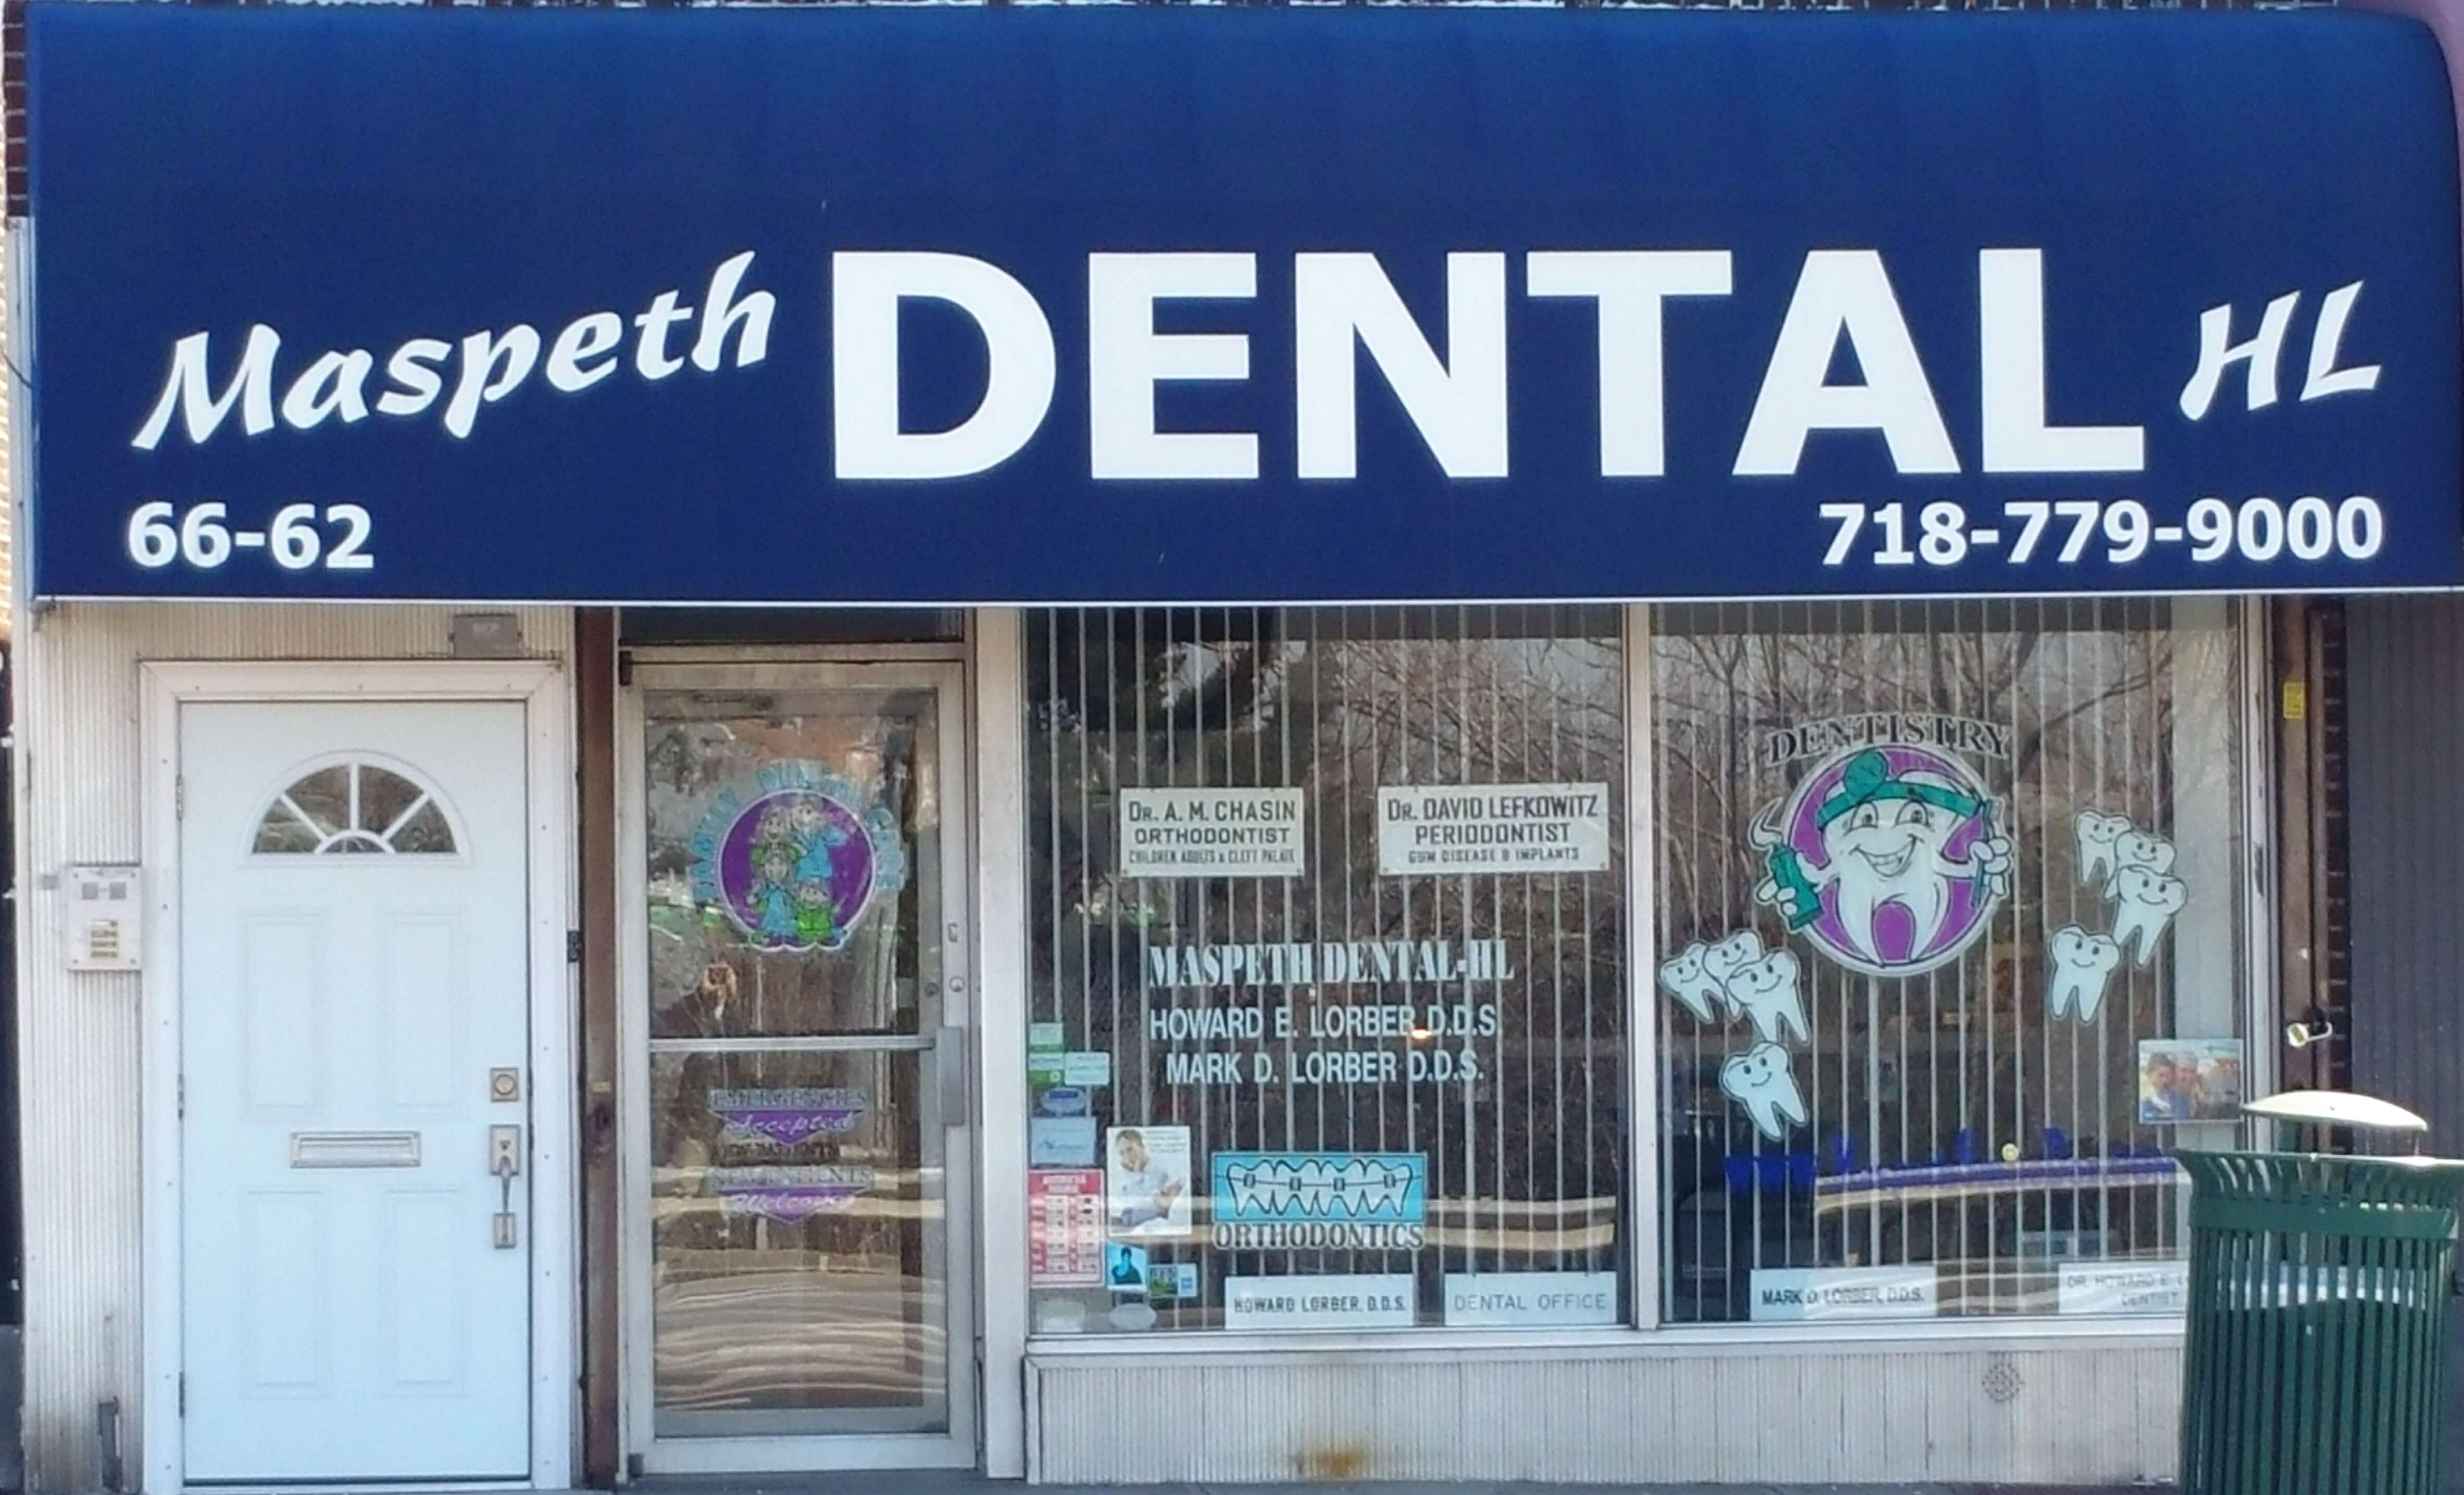 Maspeth Dental - HL, P.C.